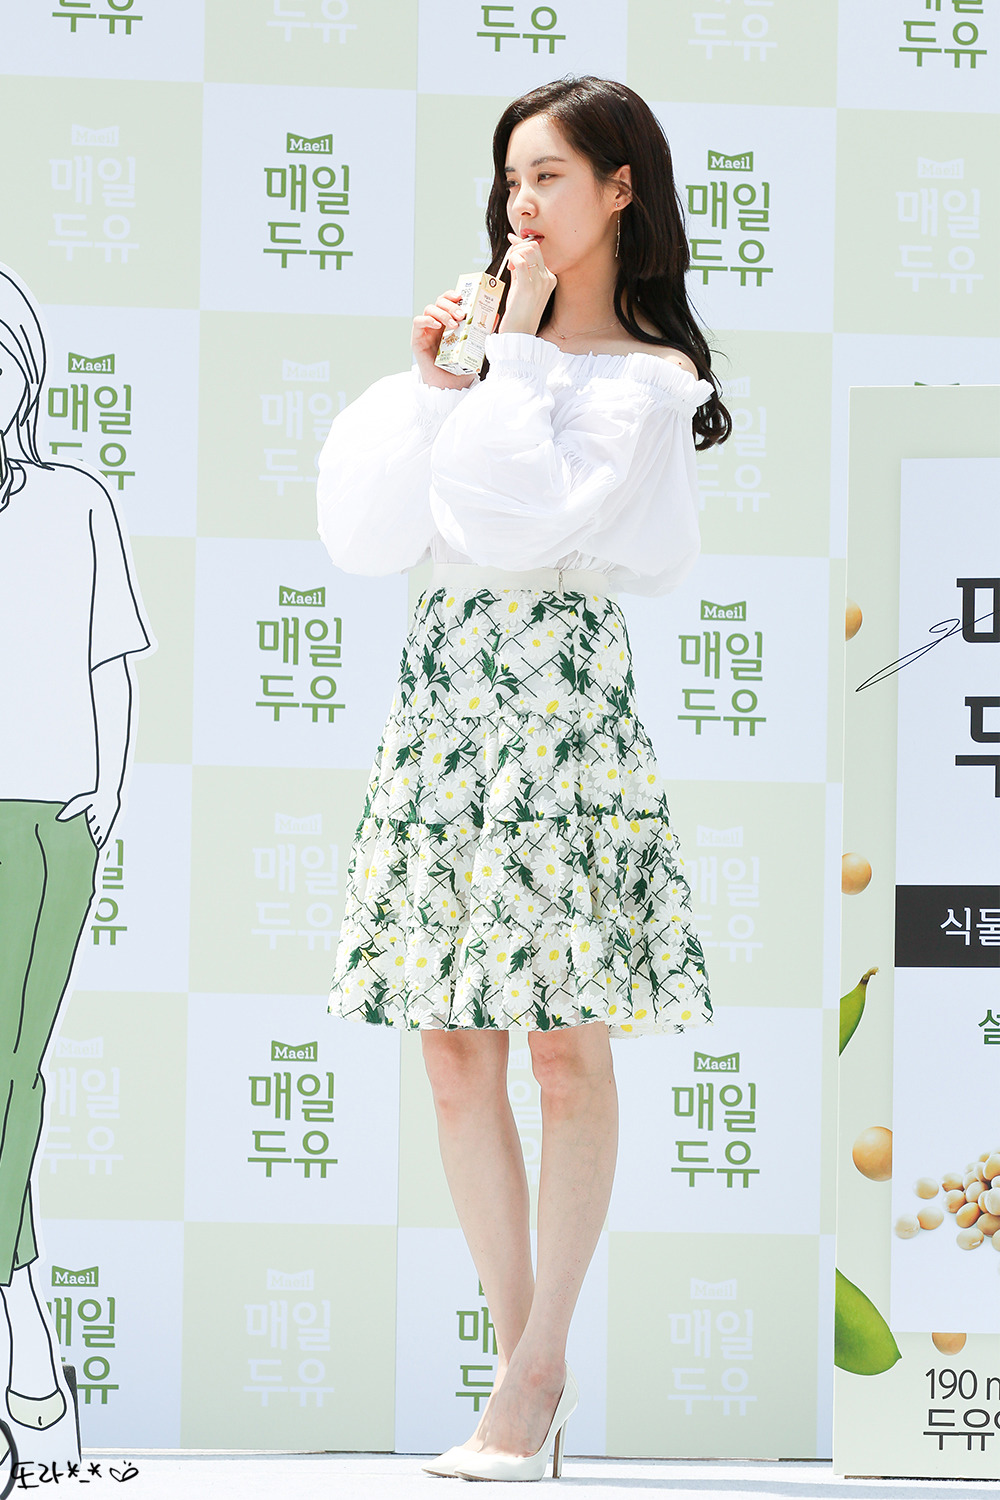  [PIC][03-06-2017]SeoHyun tham dự sự kiện “City Forestival - Maeil Duyou 'Confidence Diary'” vào chiều nay - Page 2 2373743A5933BC07222899